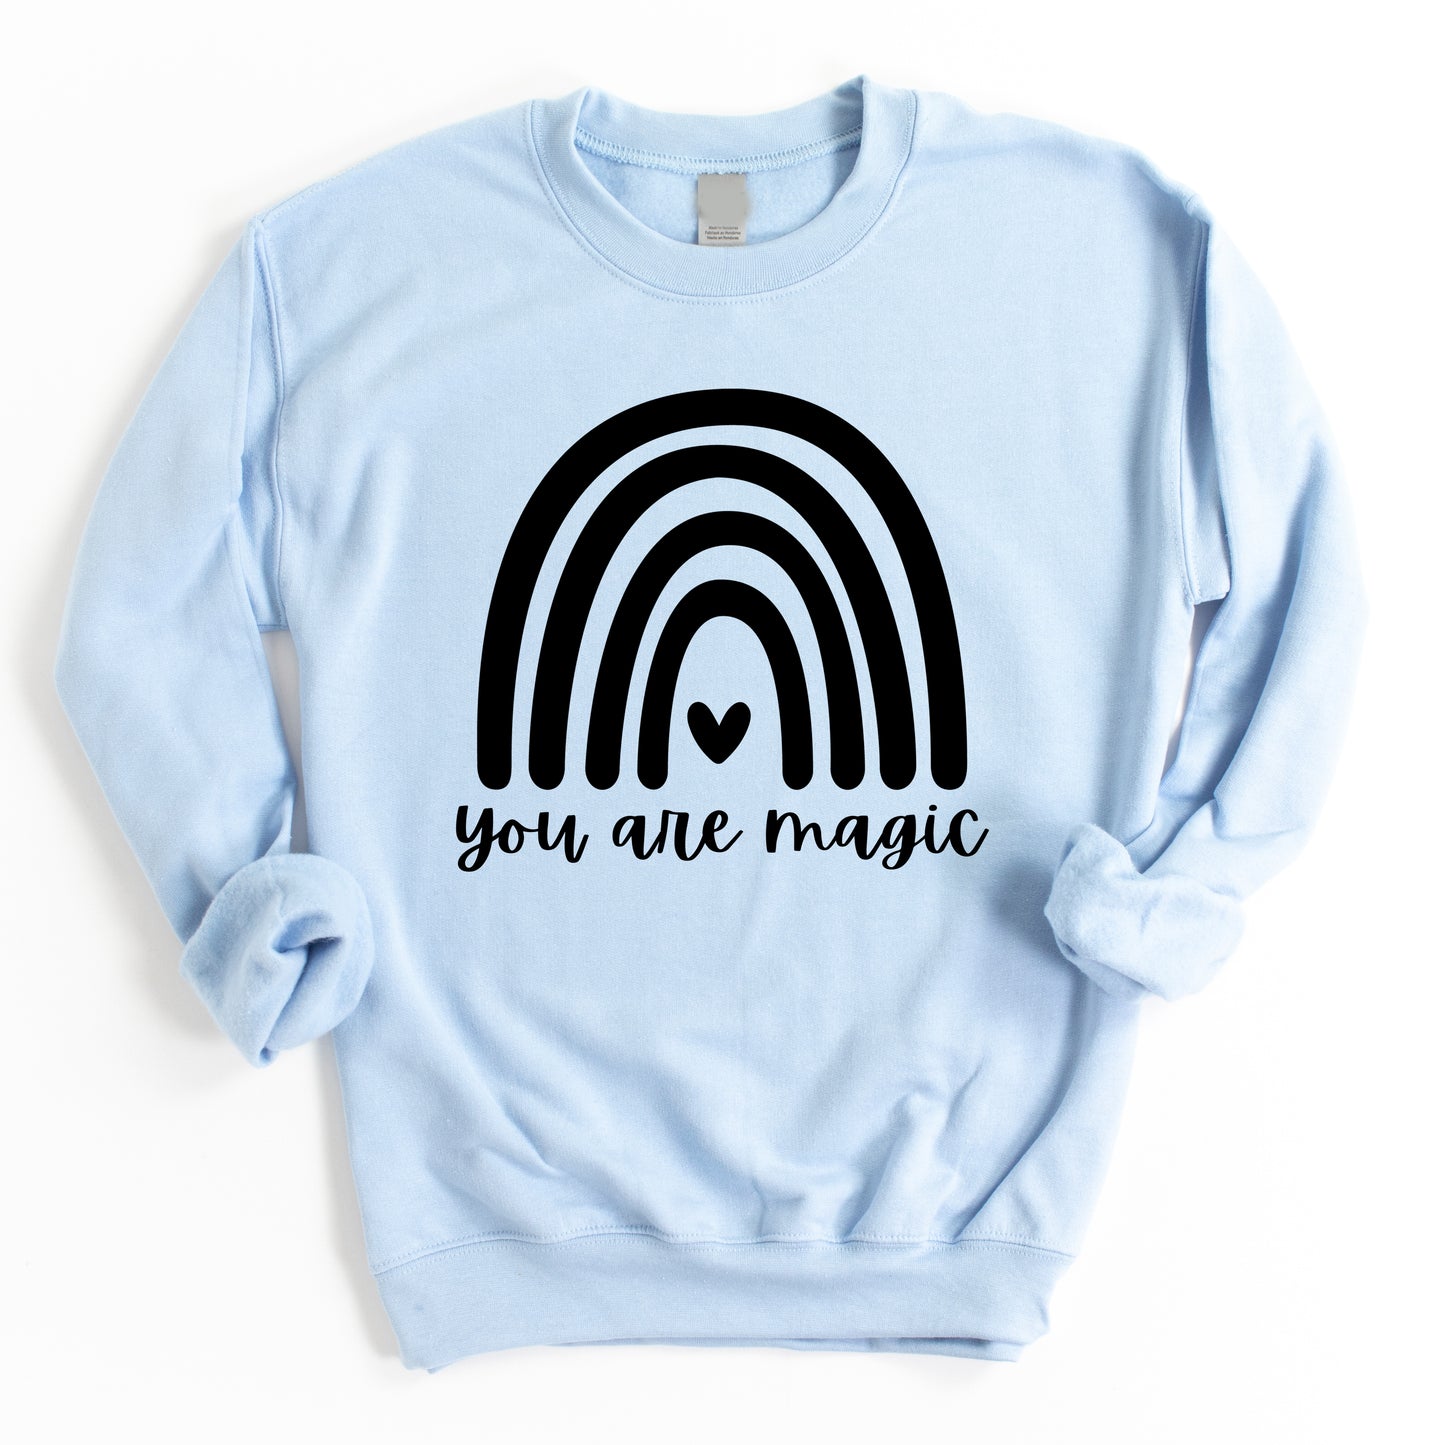 You Are Magic Sweatshirt